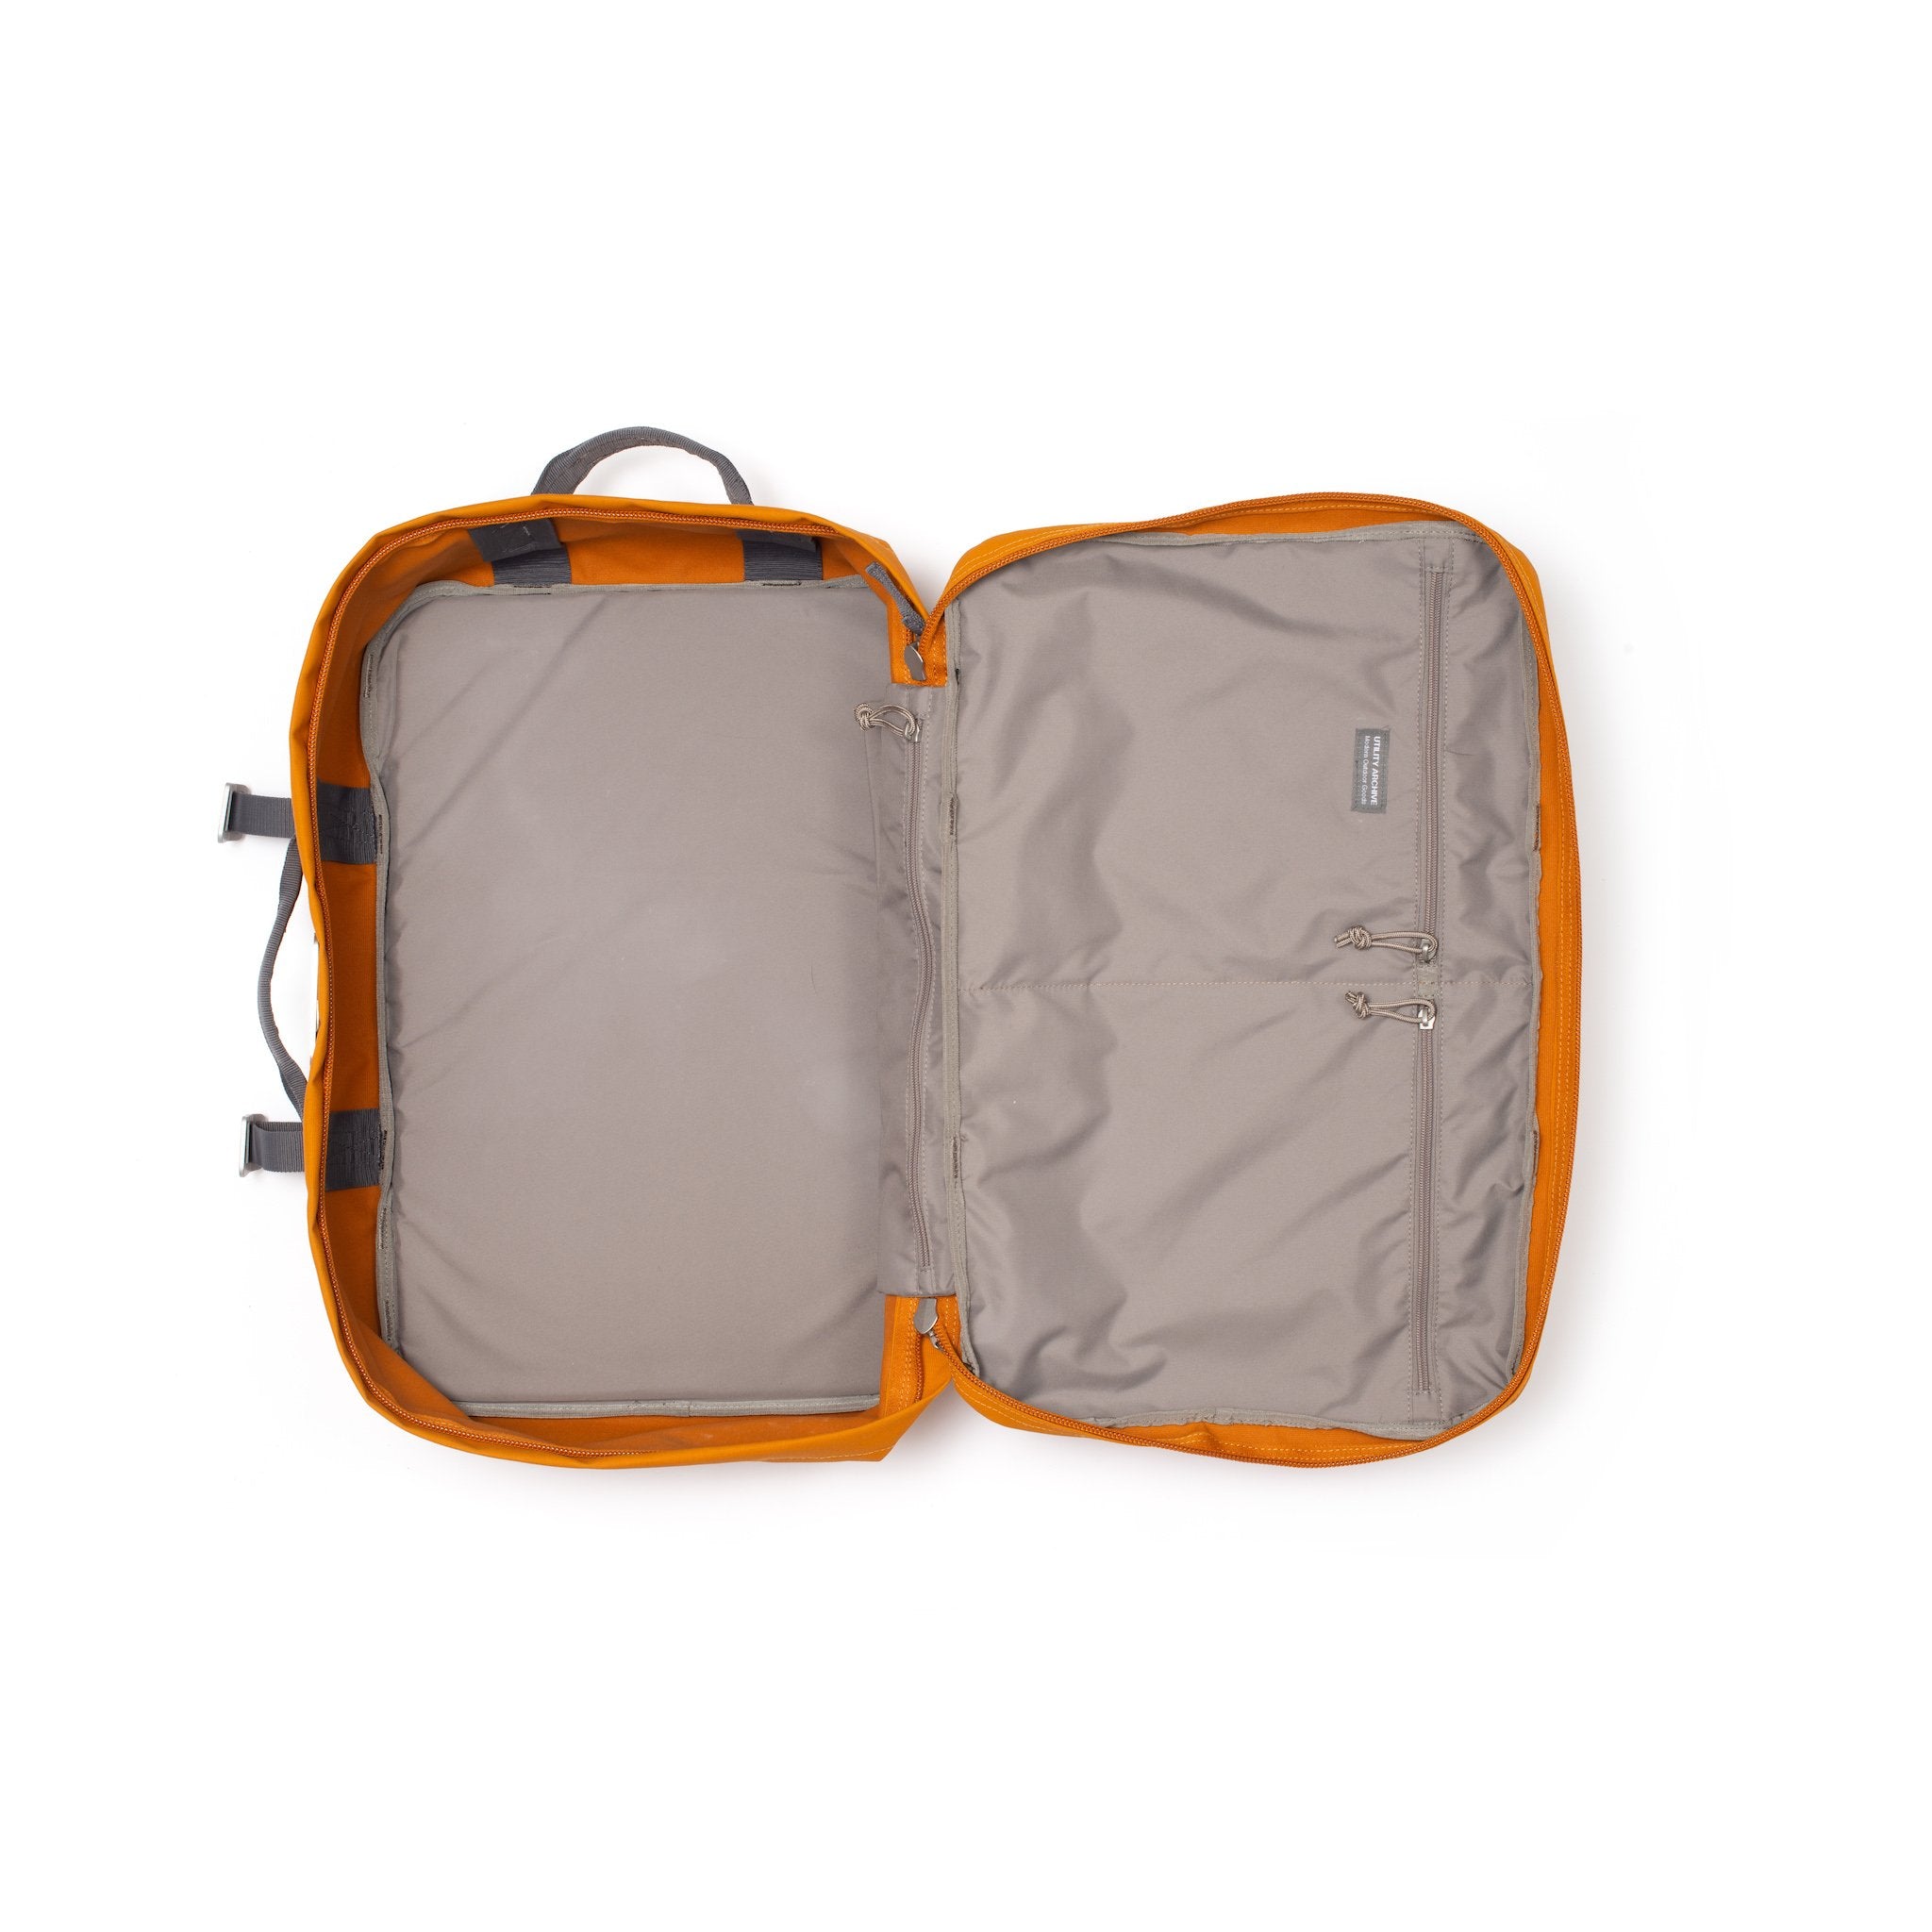 Orange travel backpack interior.